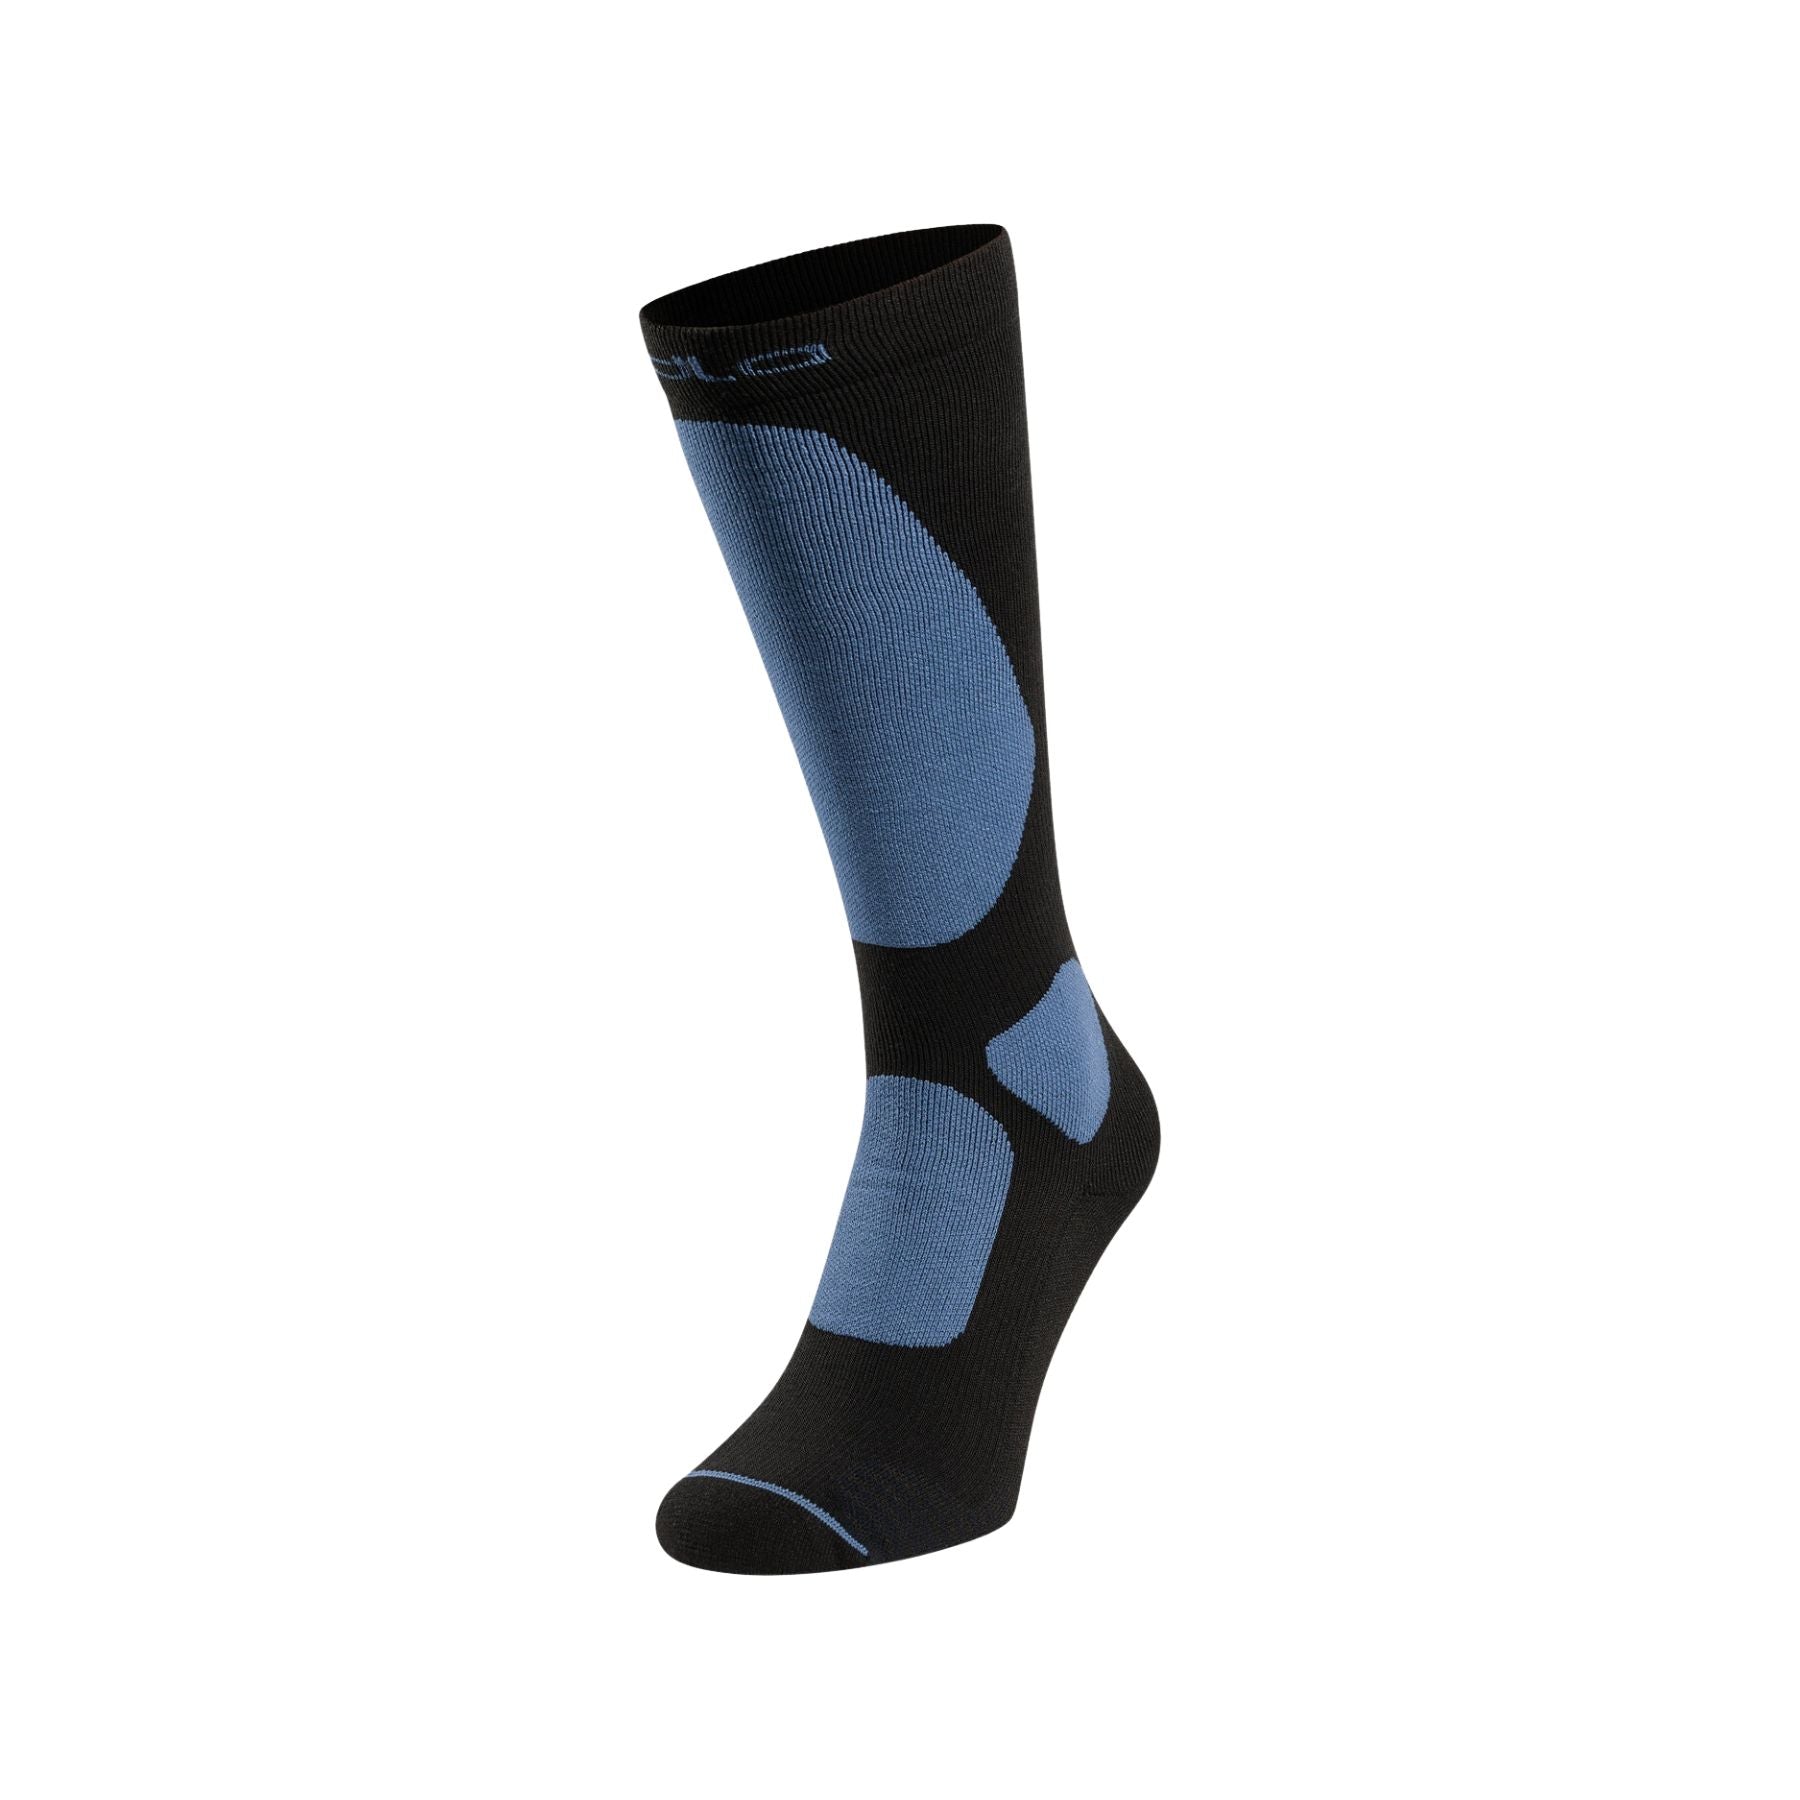 Odlo Active Warm Essentials Ski Sock in Black/ Folkstone Gray